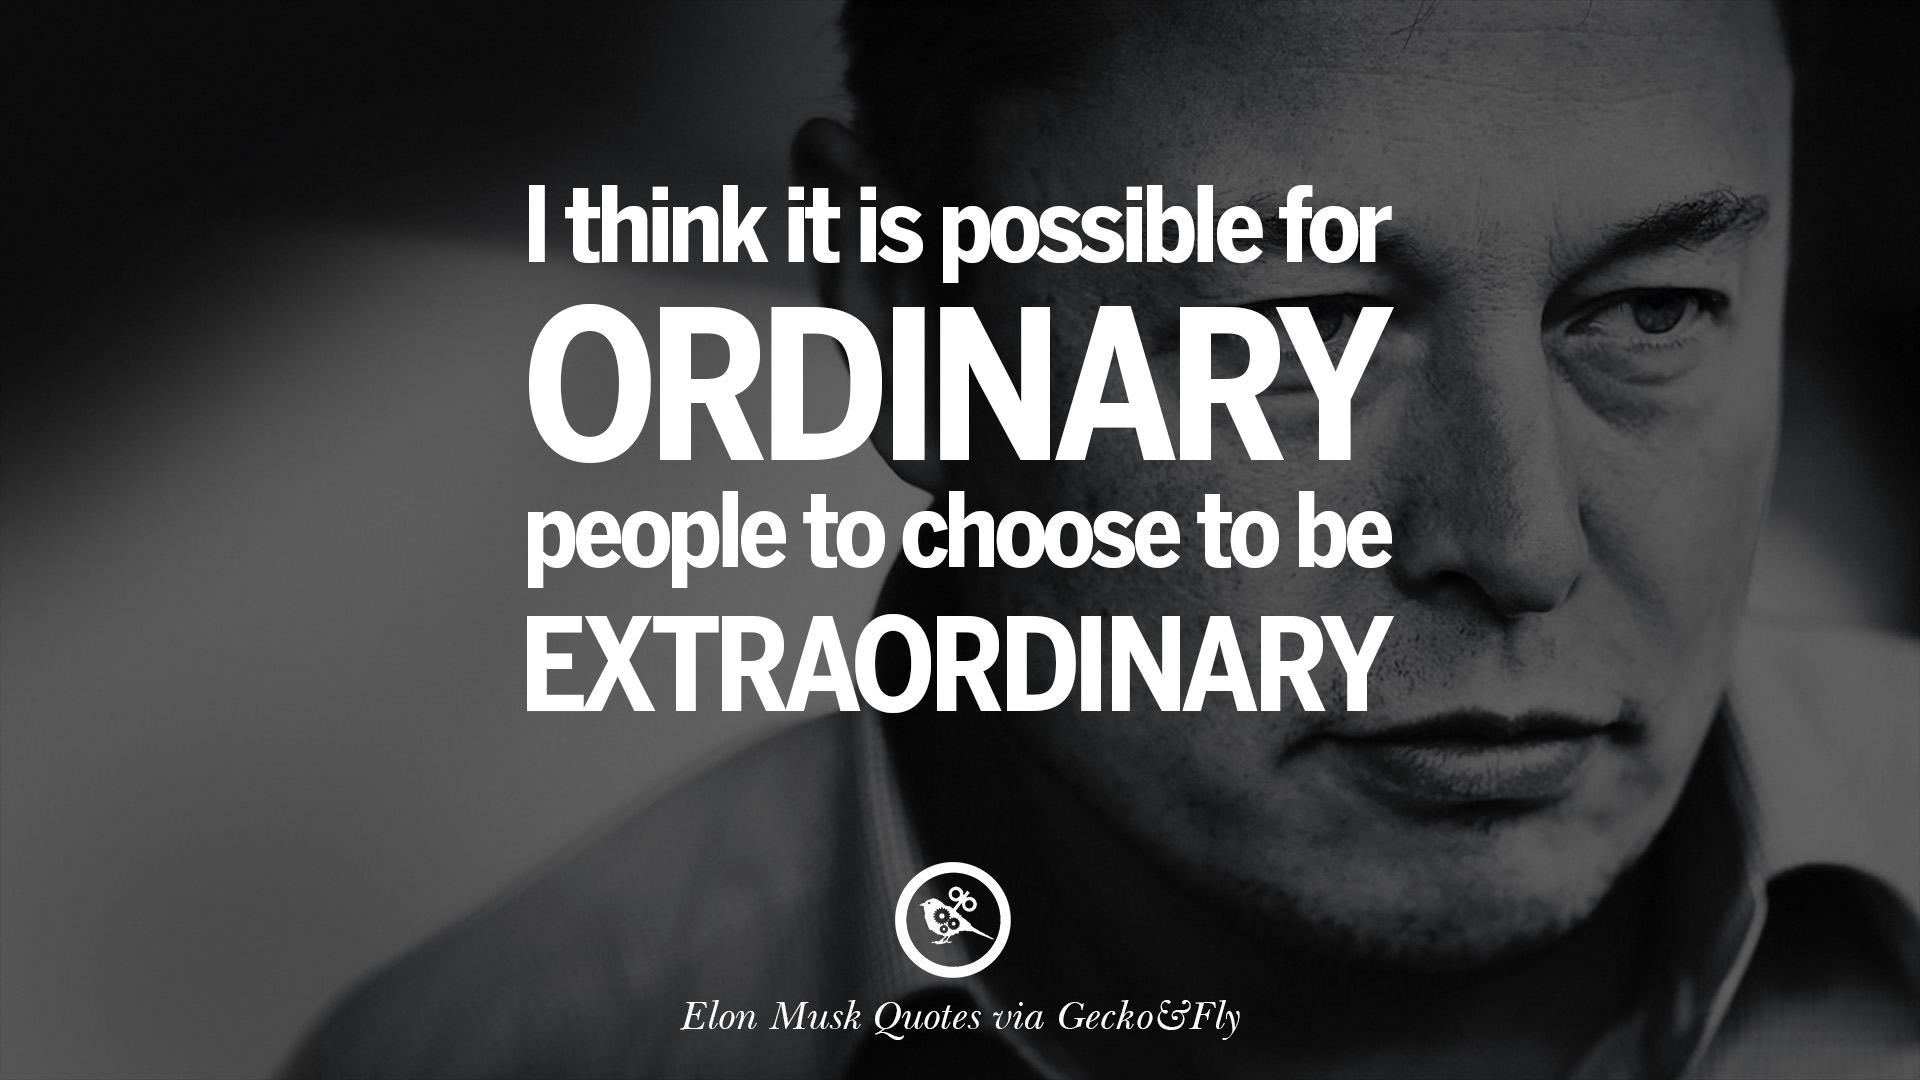 Elon Musk Quote 2